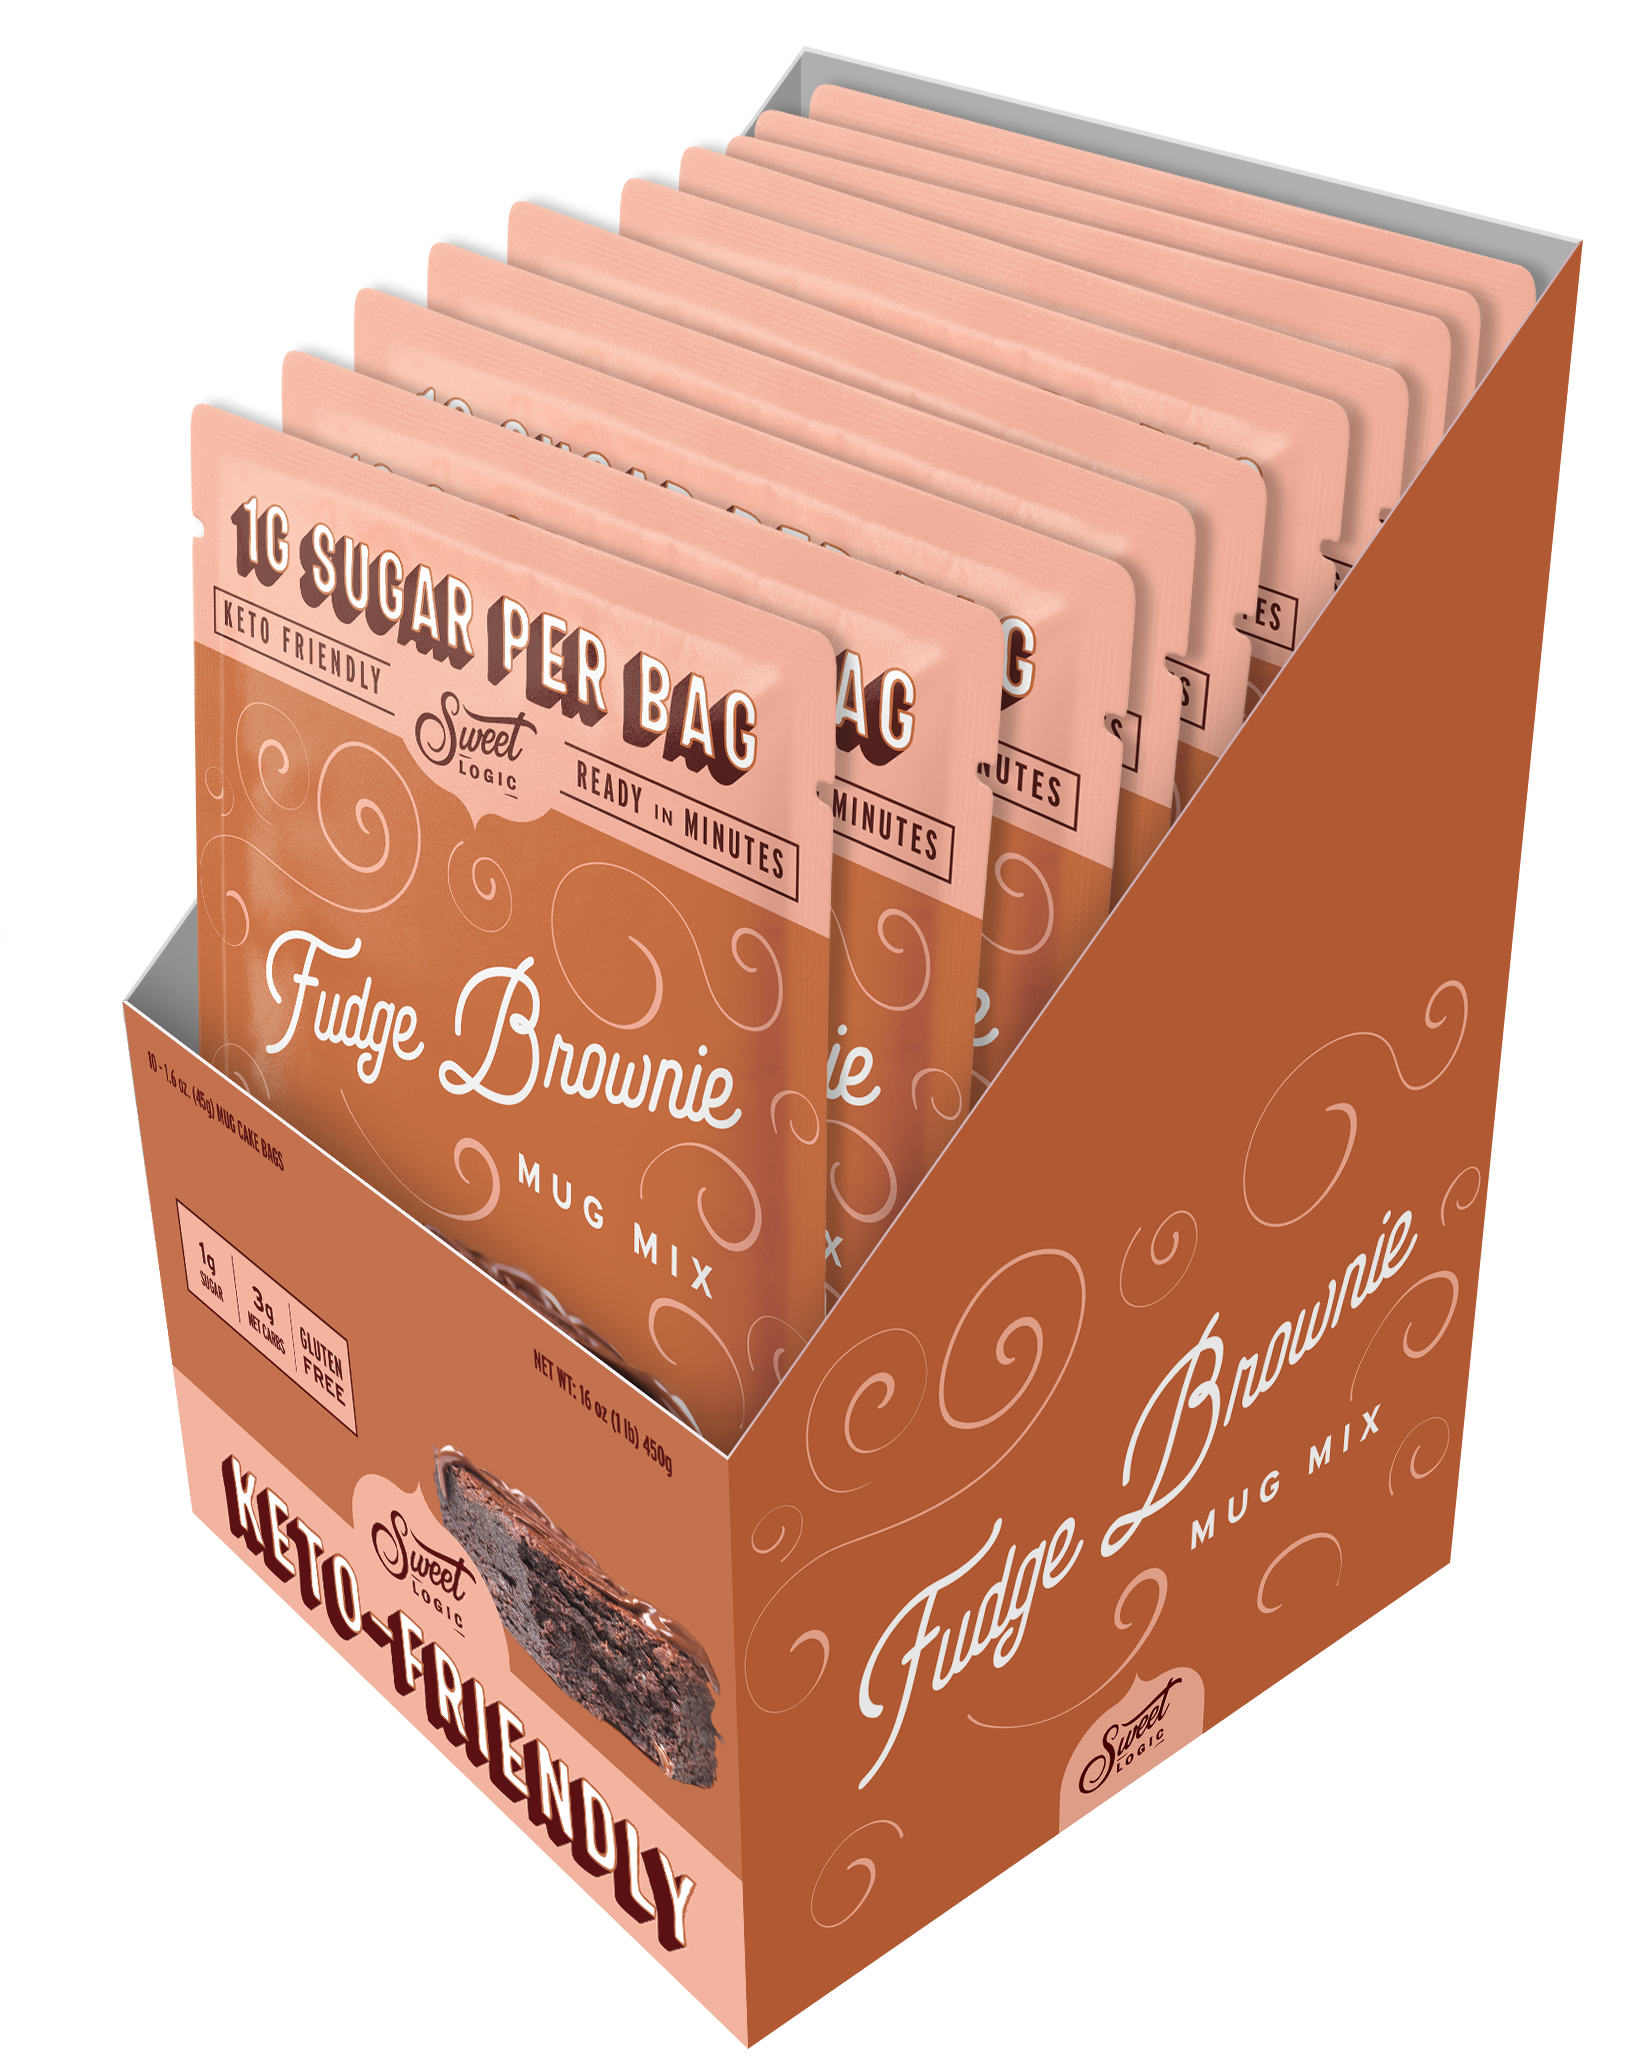 Brownie Vegan Keto Mug Cake (10-Pack) - Retail Box